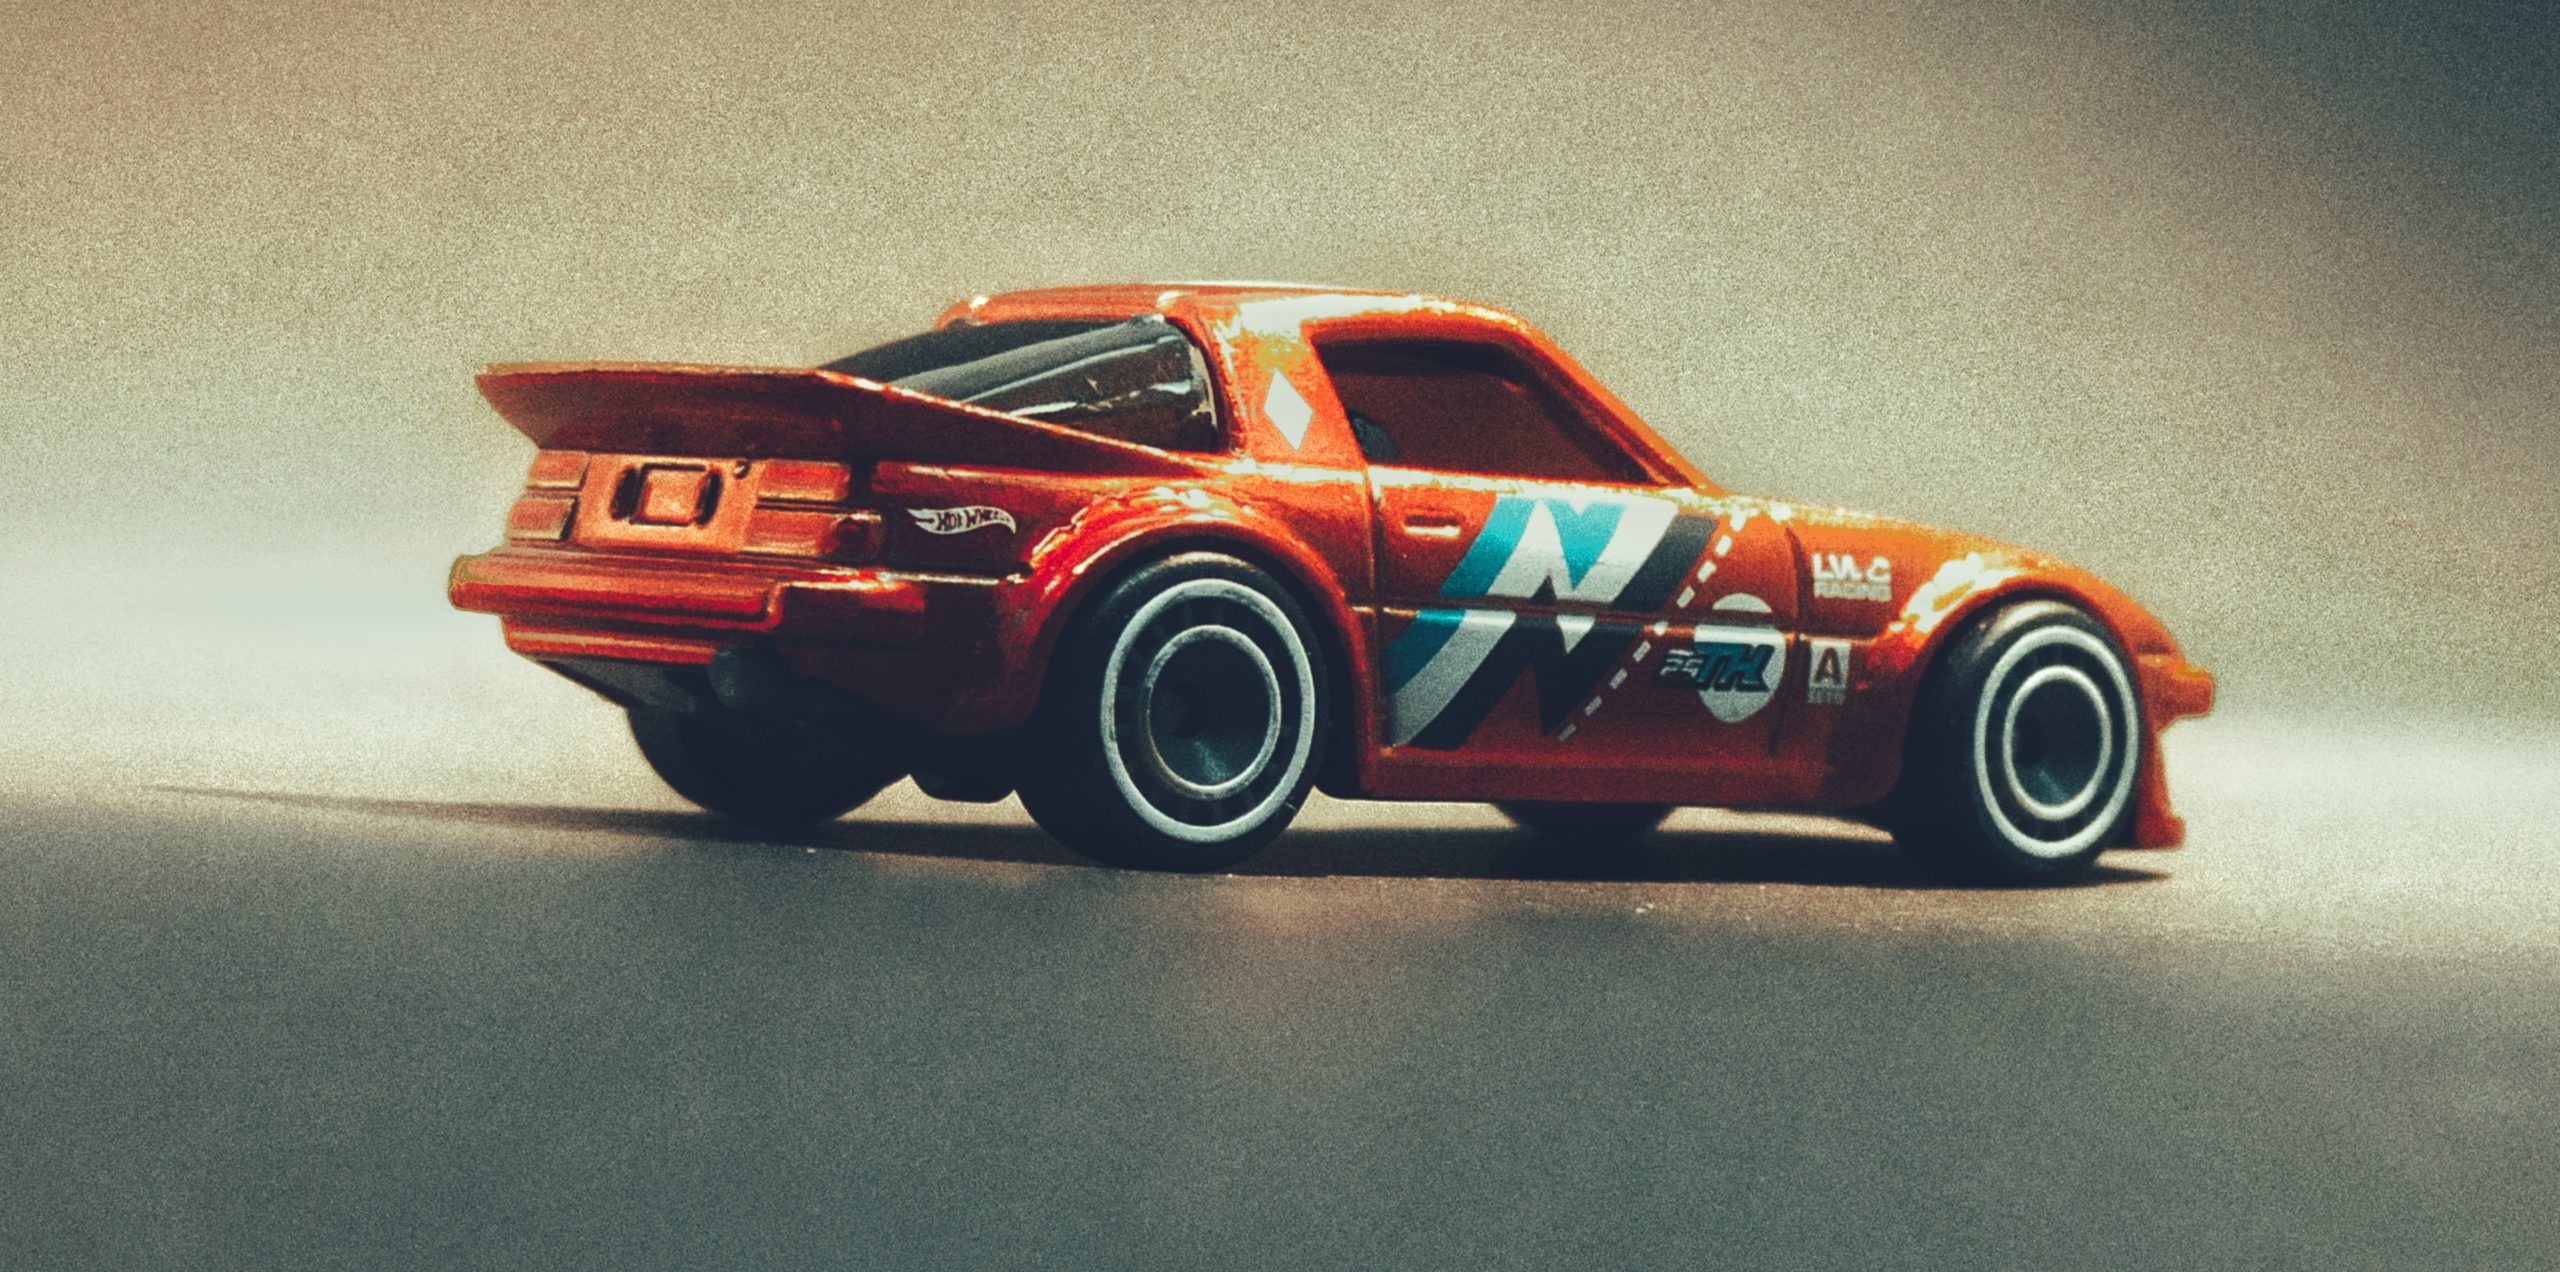 Hot Wheels Mazda RX-7 (GHG28) 2020 (130/250) Speed Blur (5/5) spectraflame orange Super Treasure Hunt (STH) side angle